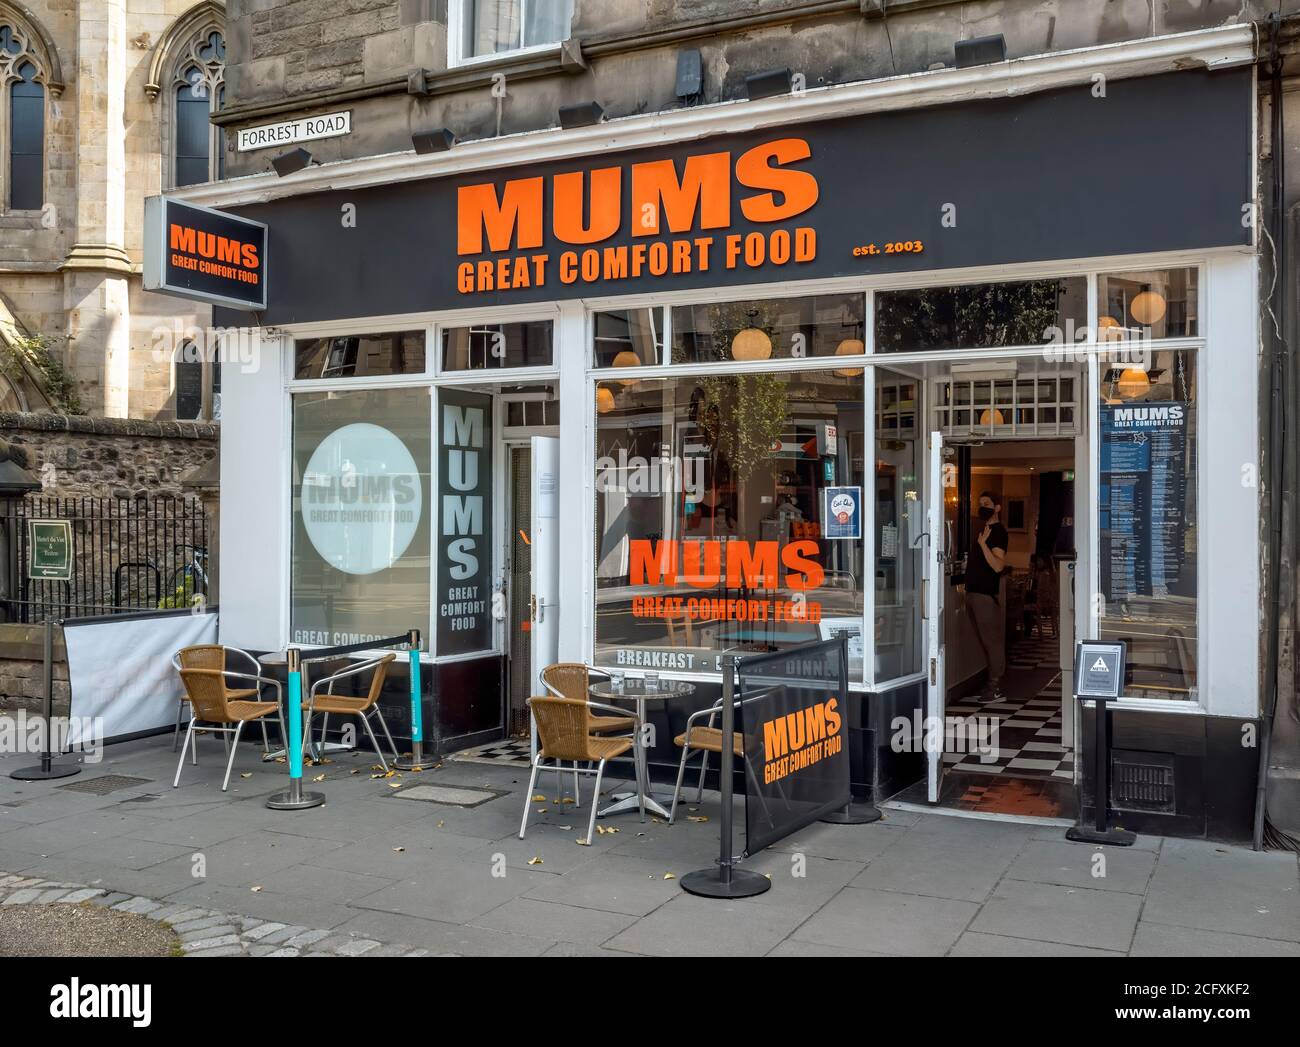 Mums Restaurant - Great Comfort Food - Edinburgh, Schottland, Großbritannien. Stockfoto